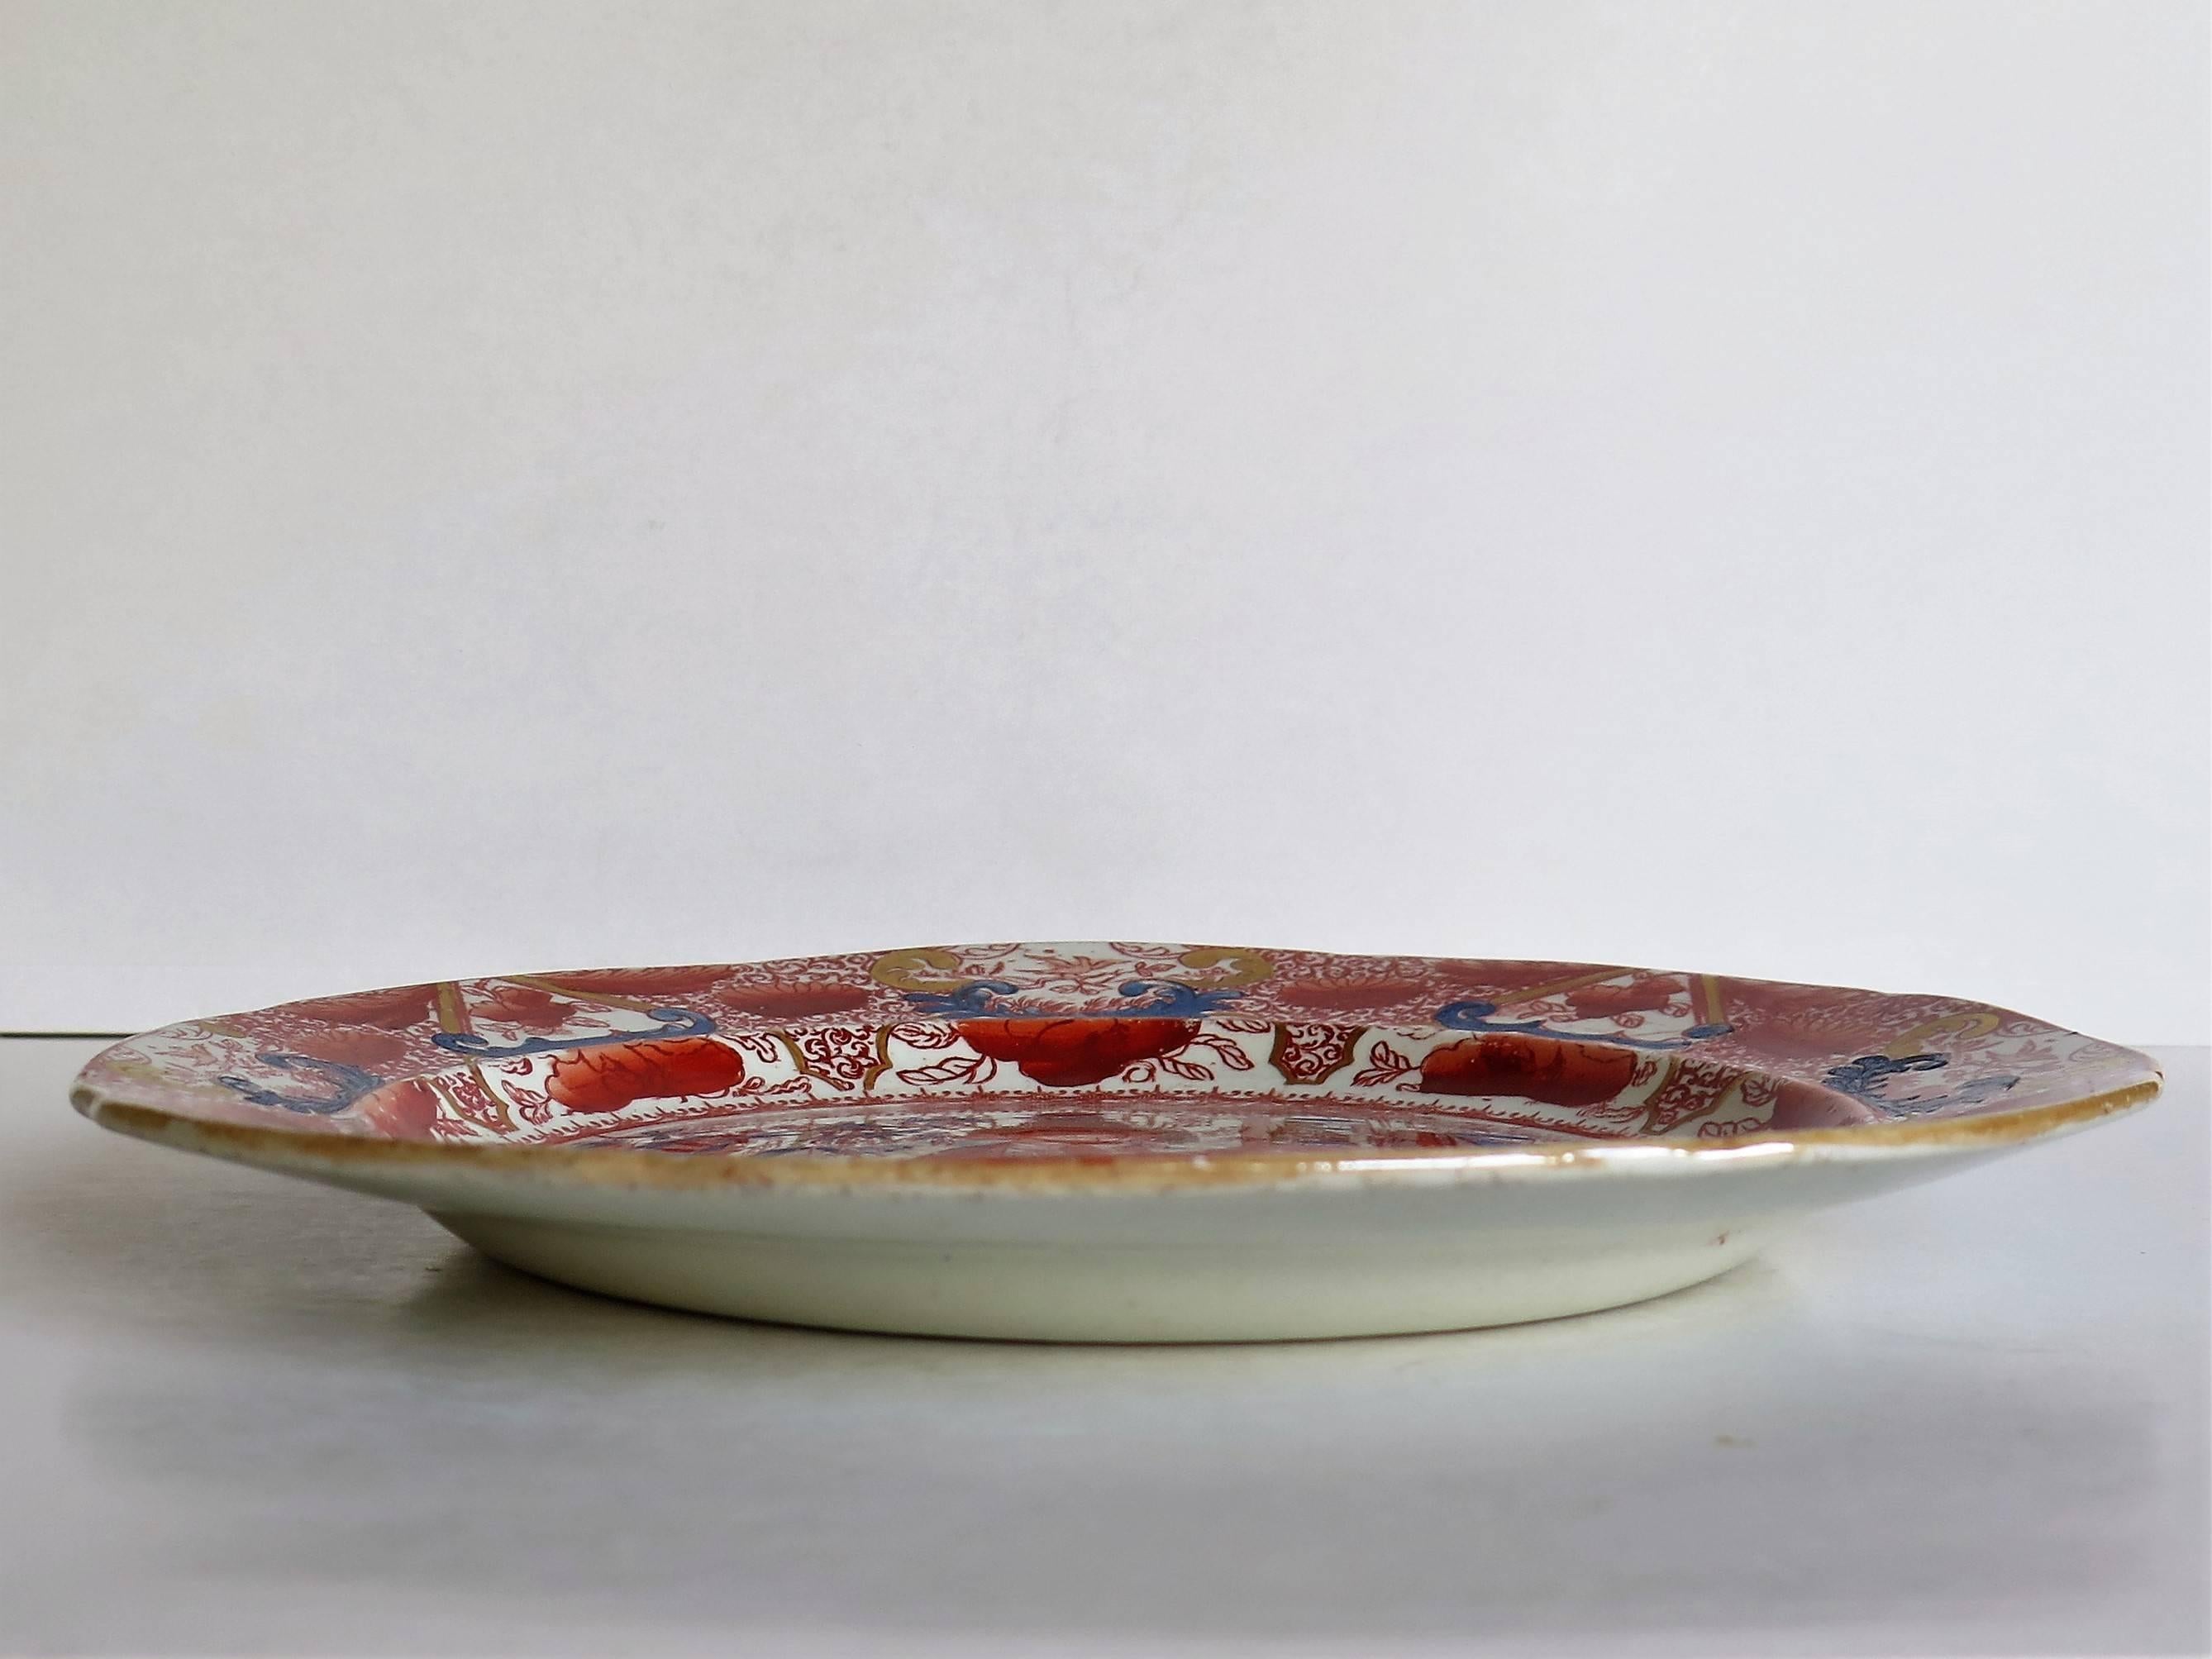 Glazed Early Mason's Ironstone Dinner Plate Very Rare Red Mandarin Pattern, circa 1815